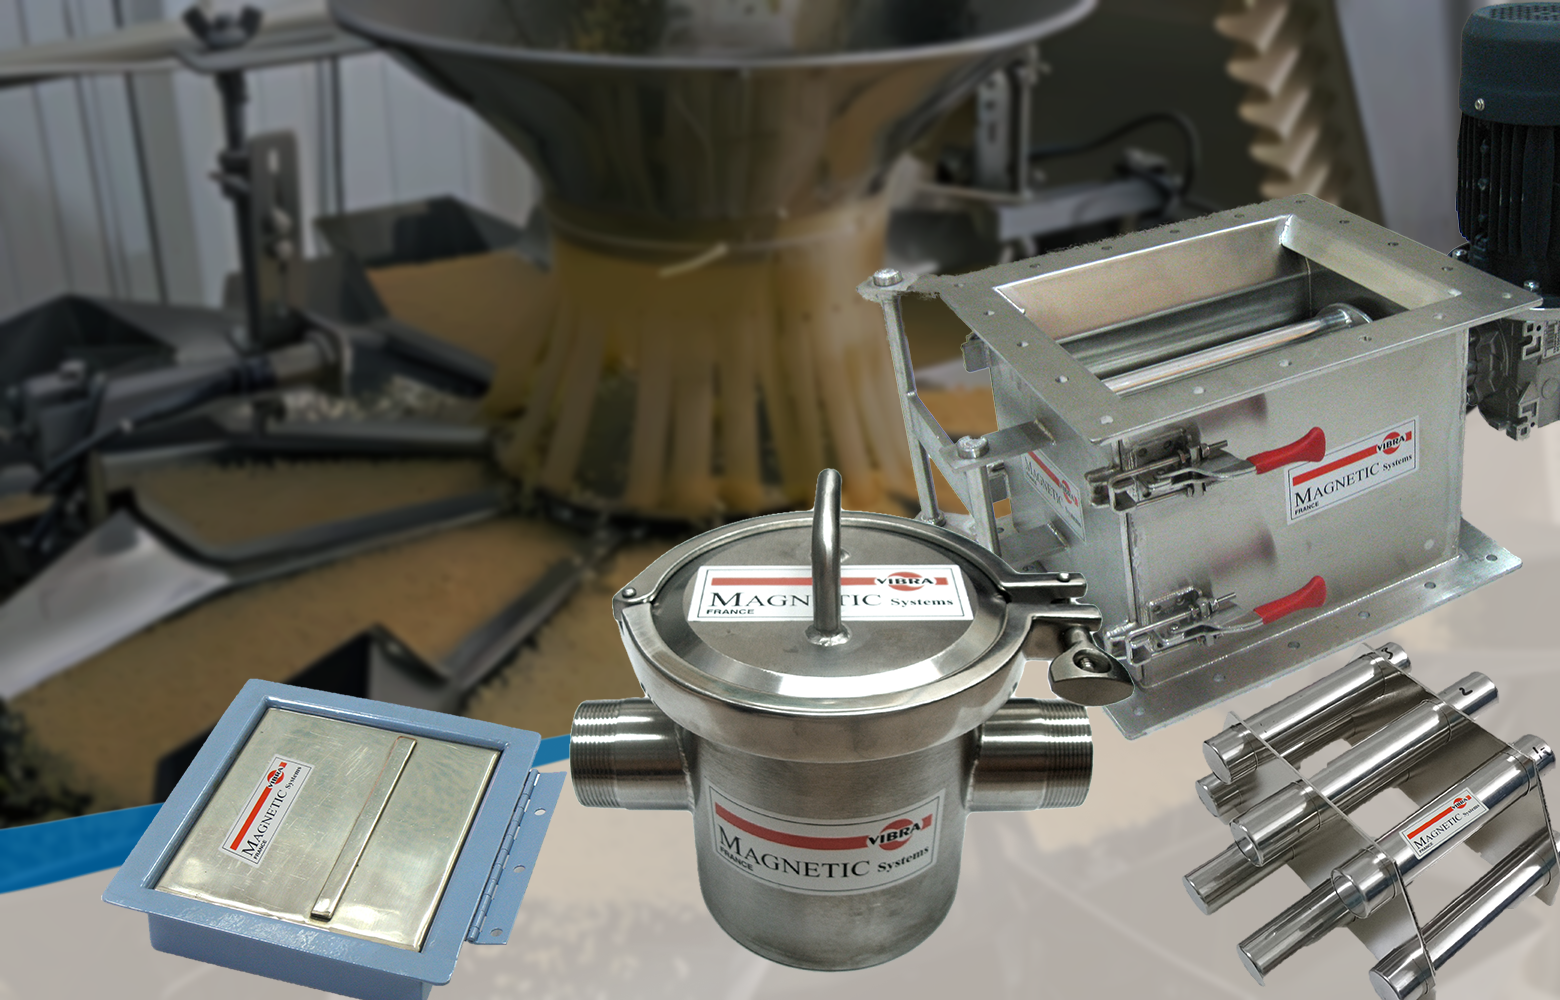  Magnet Calibration & Magnet Measuring Impacts Food Safety